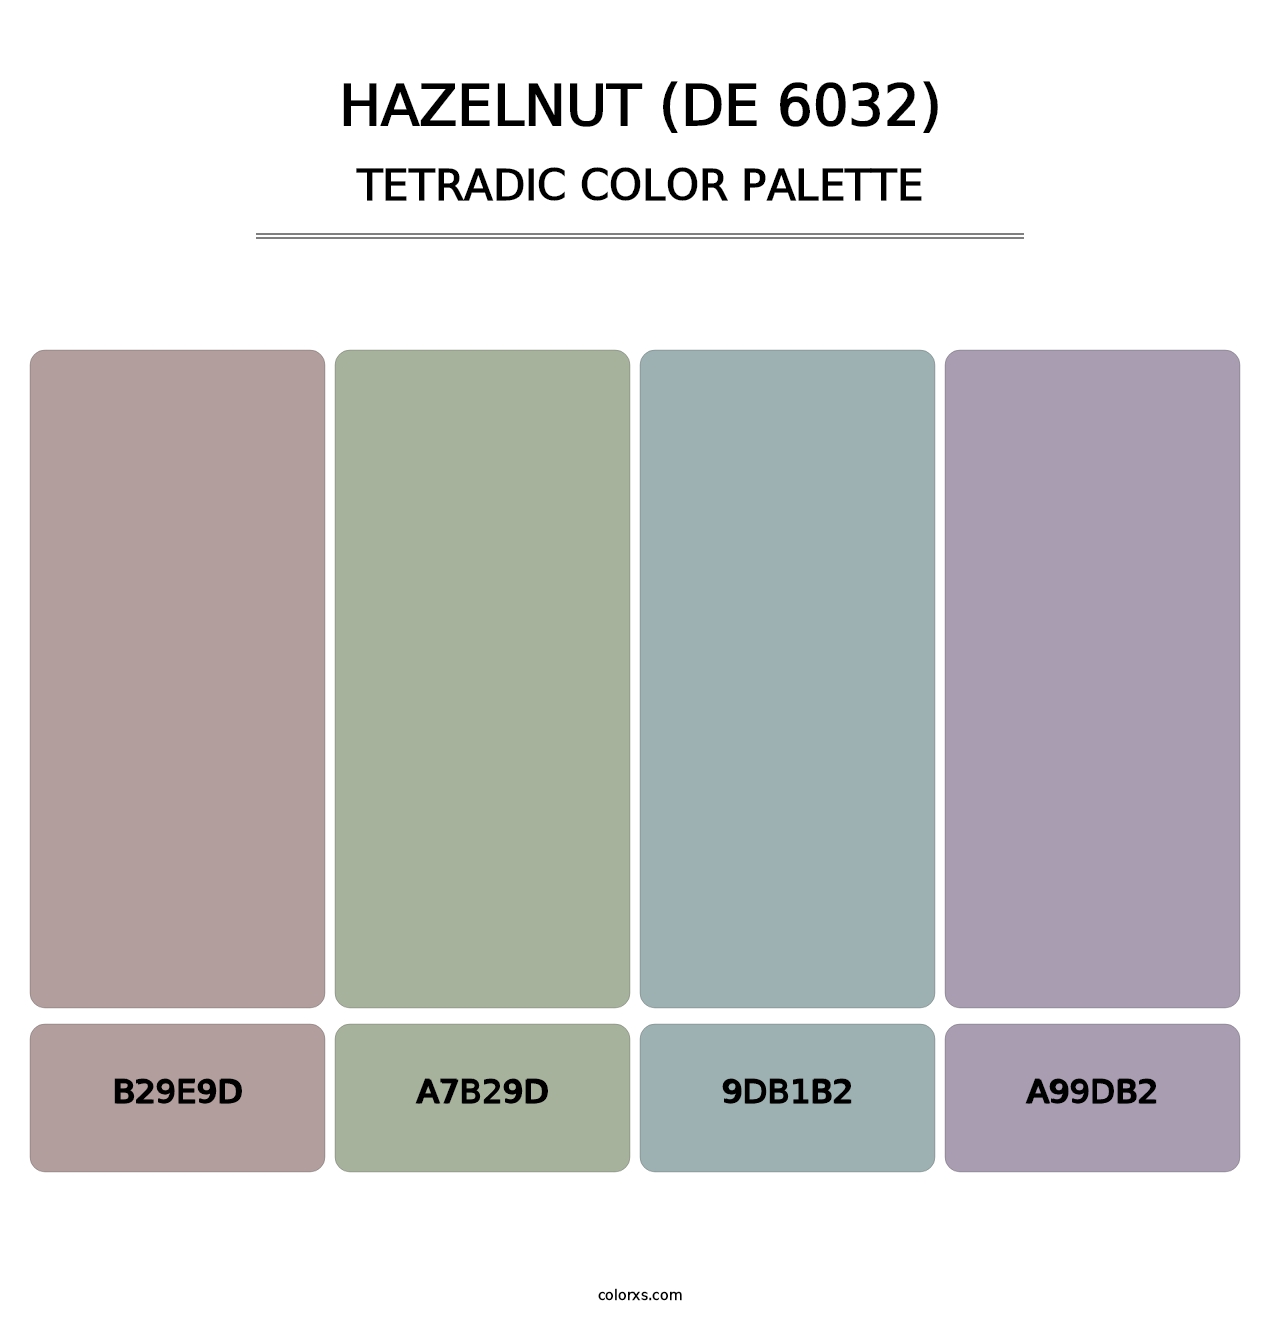 Hazelnut (DE 6032) - Tetradic Color Palette